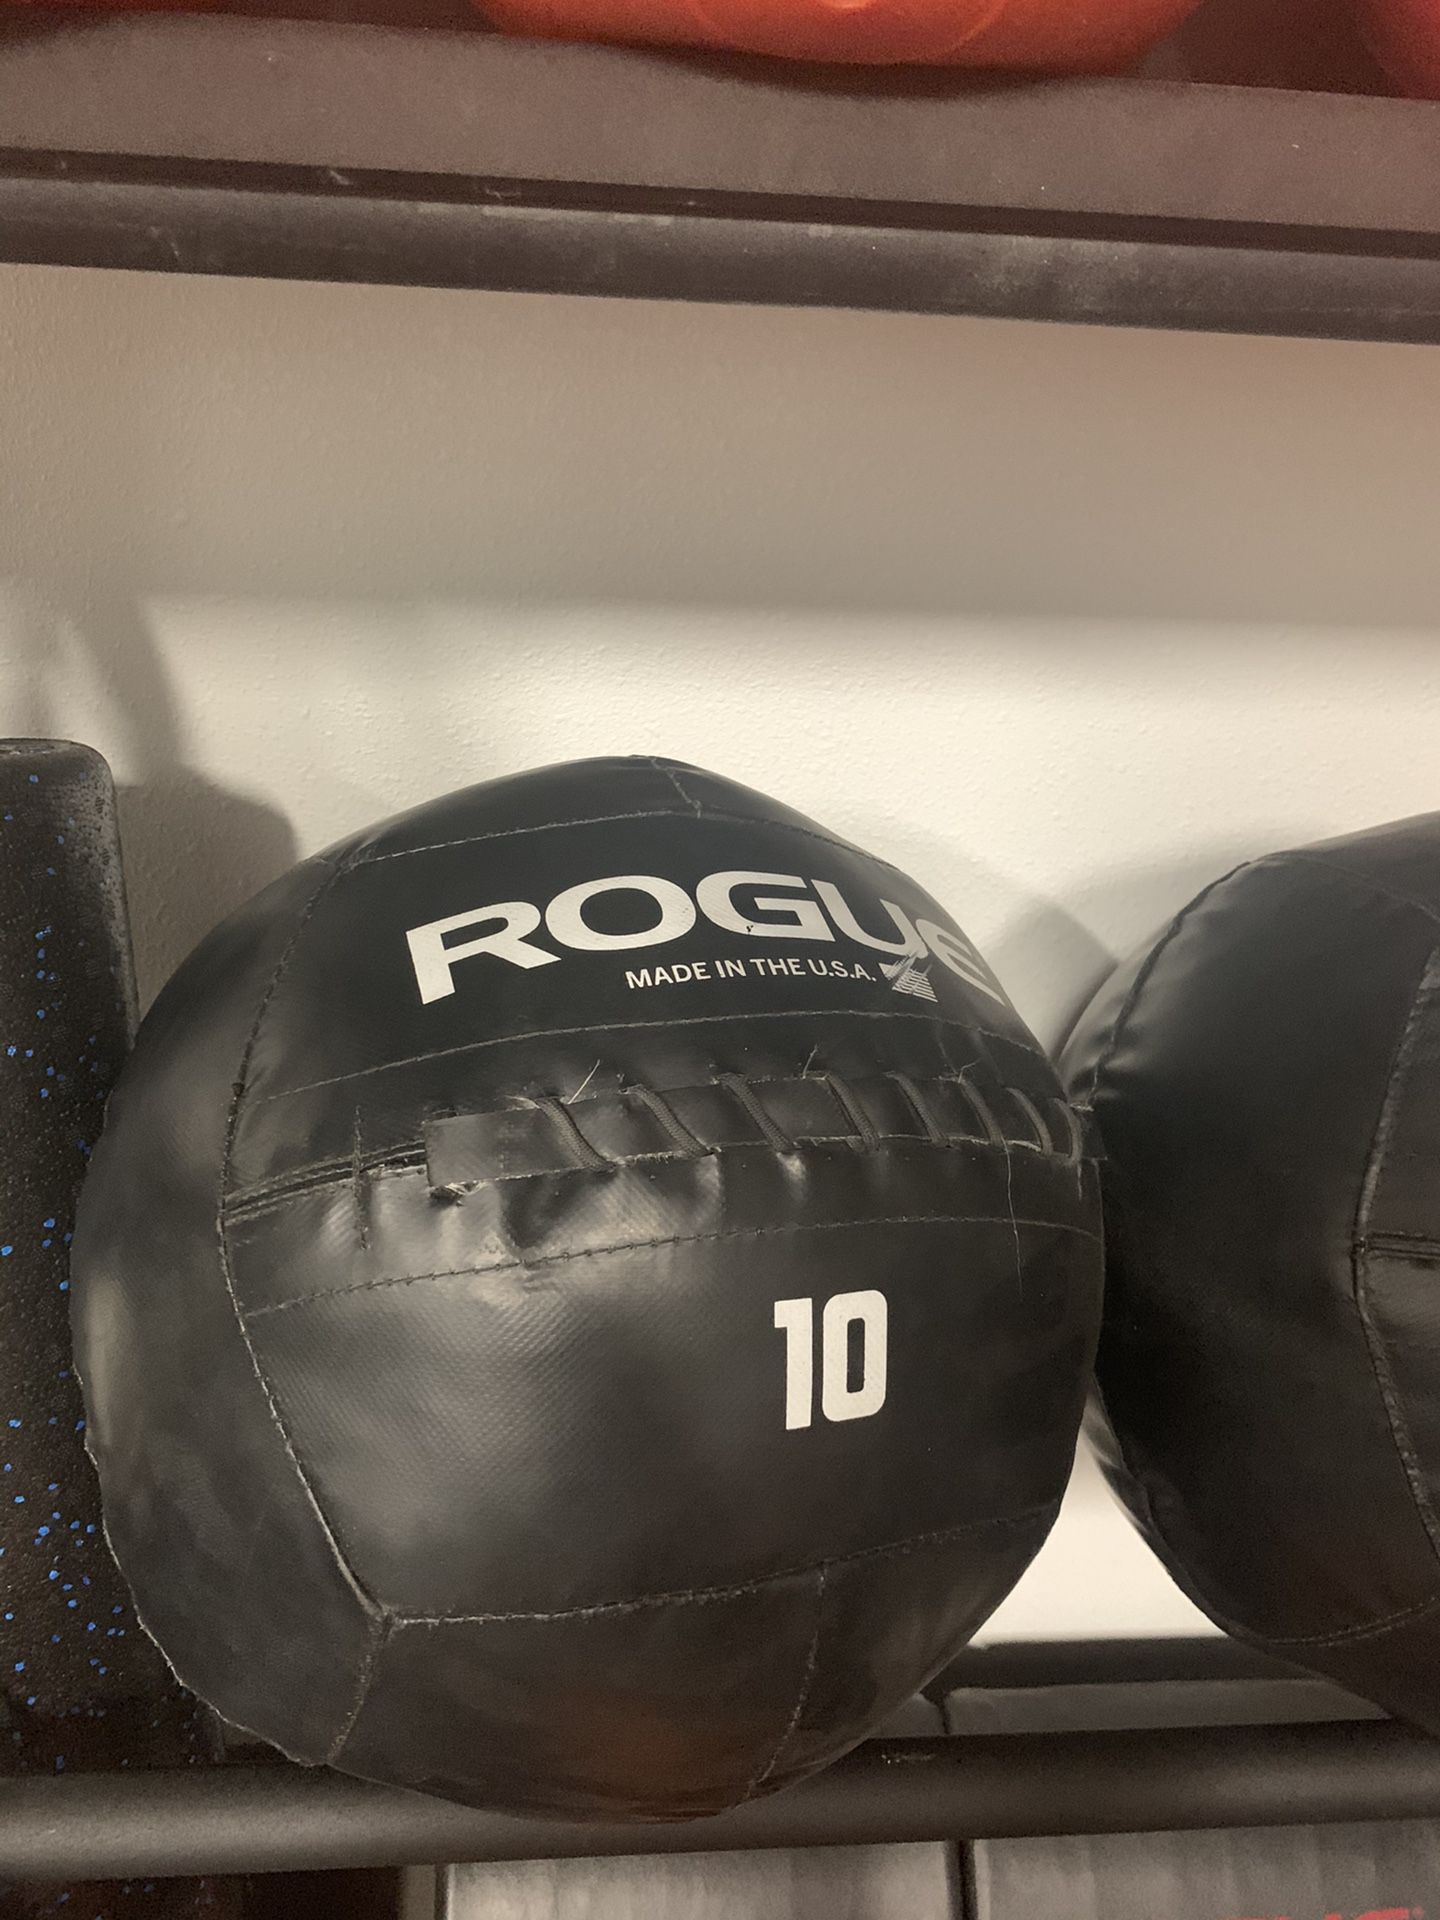 ROGUE Fitness Medicine Ball 10LB - EXCELLENT CONDITION!